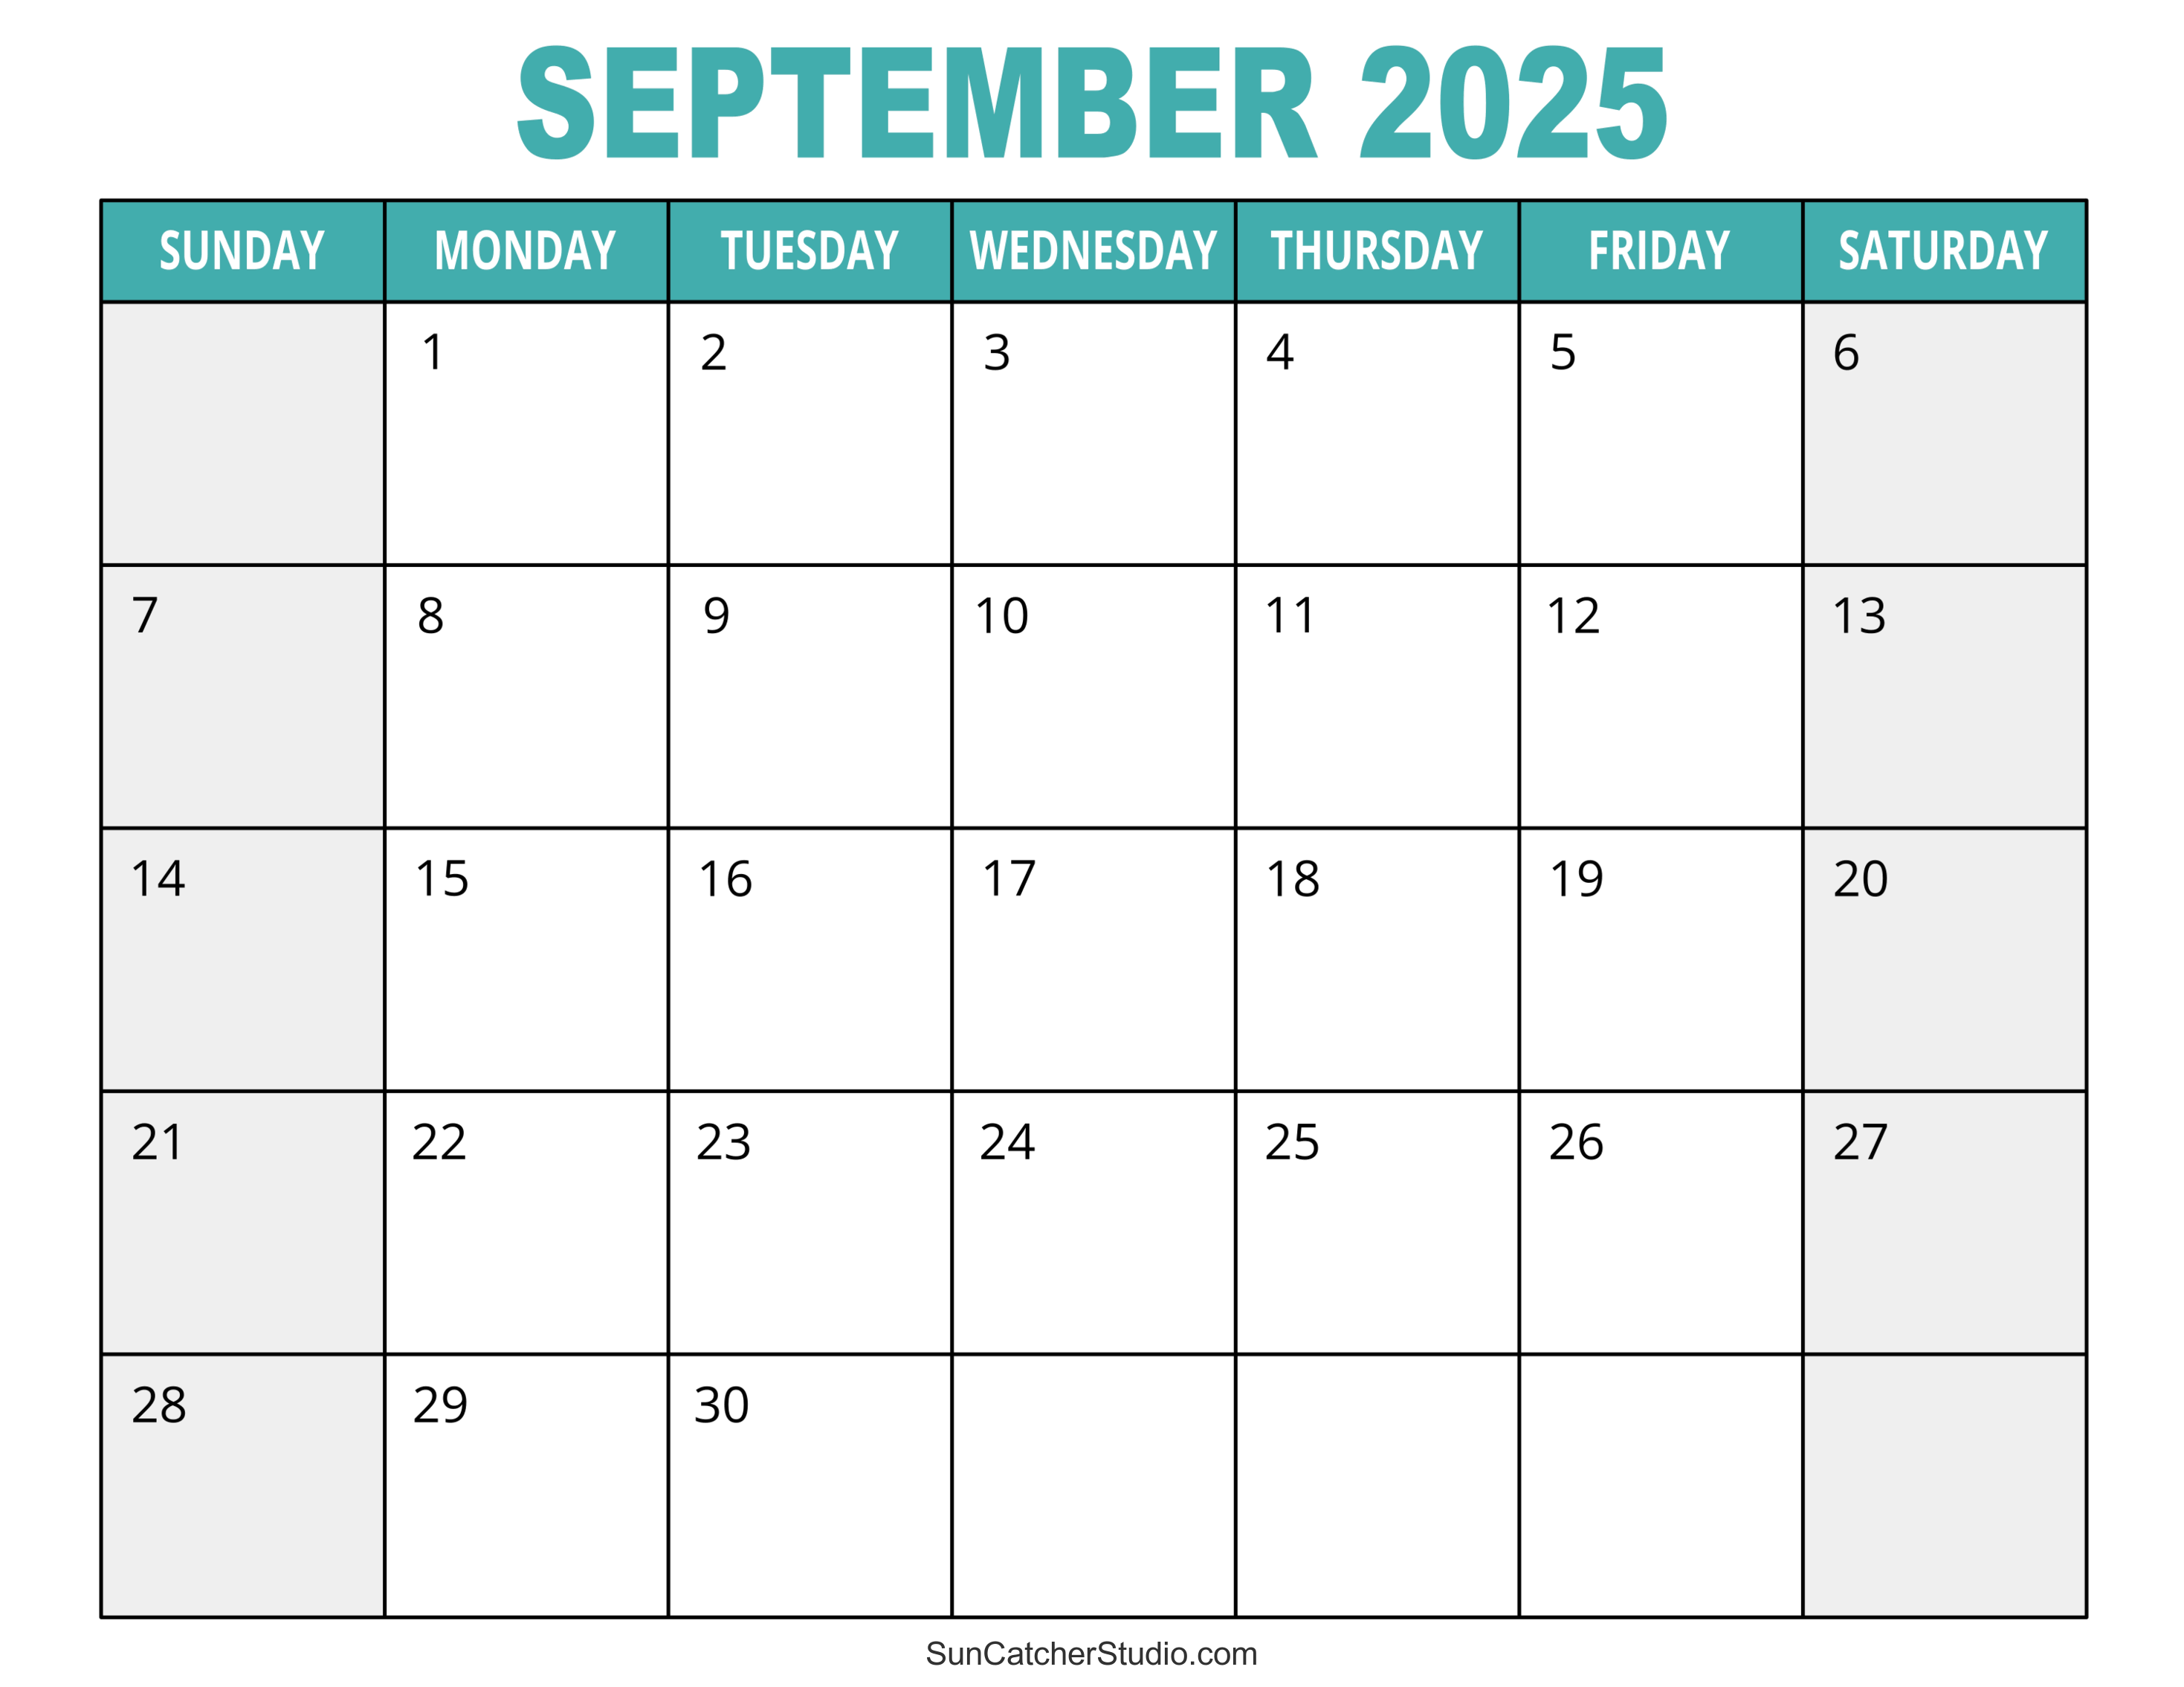 september-2025-calendar-edit-printable-diy-projects-patterns-monograms-designs-templates